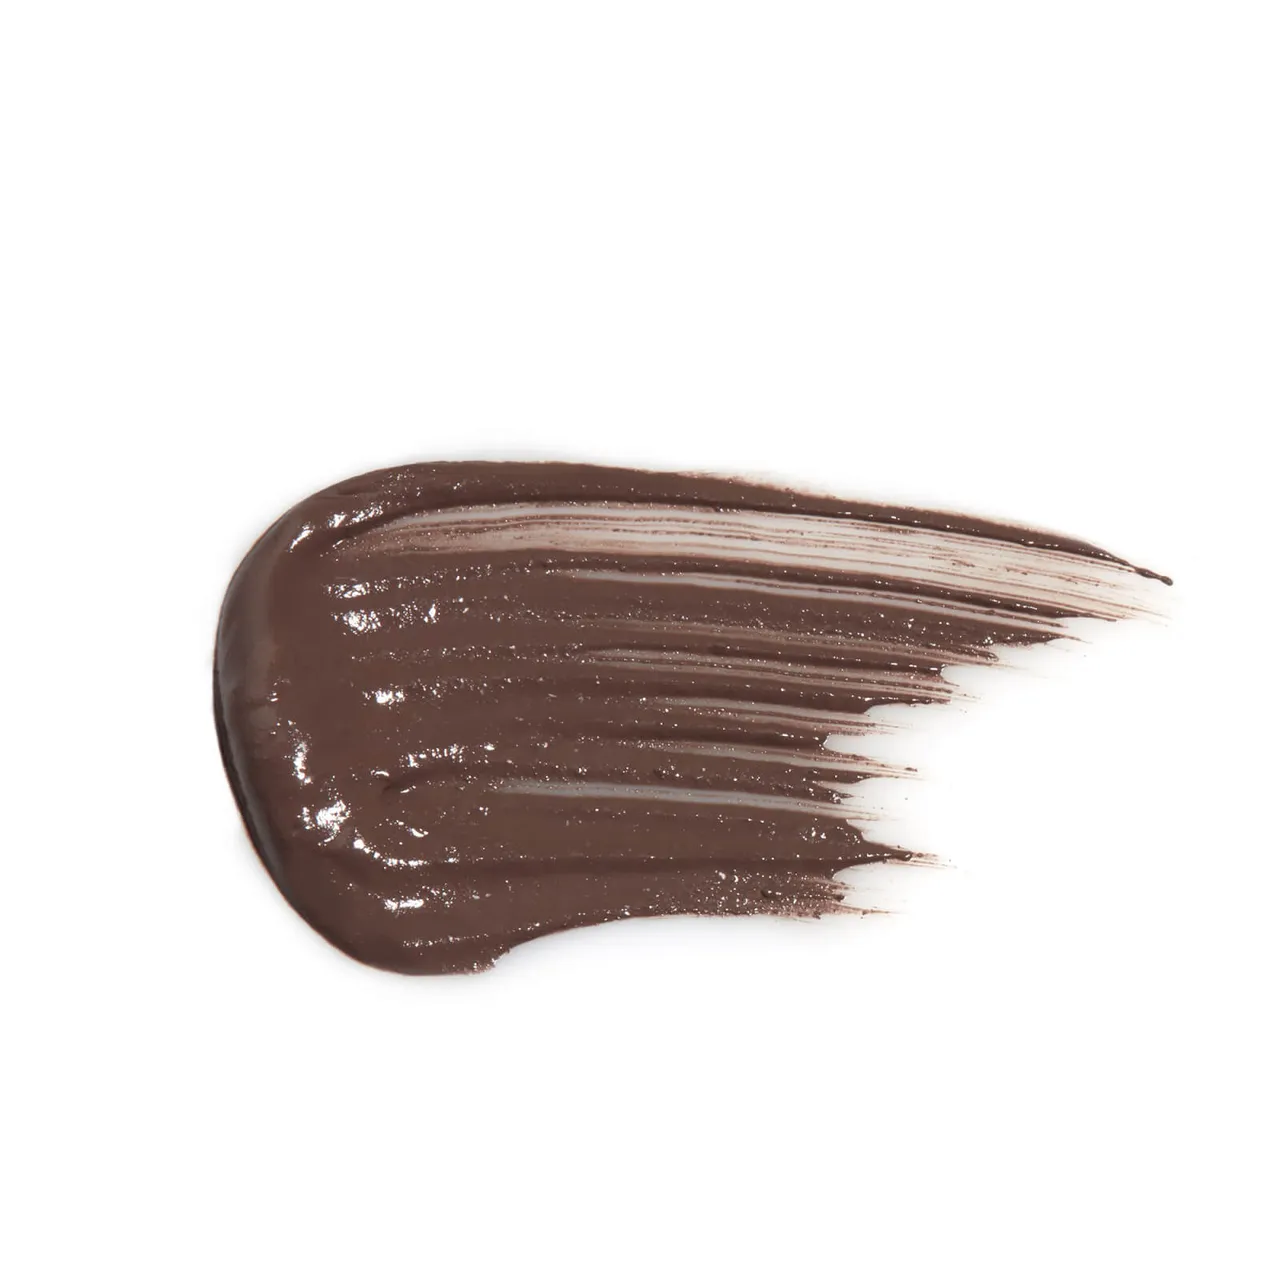 Anastasia Beverly Hills Dipbrow Gel 4.4g (Various Shades) - Chocolate